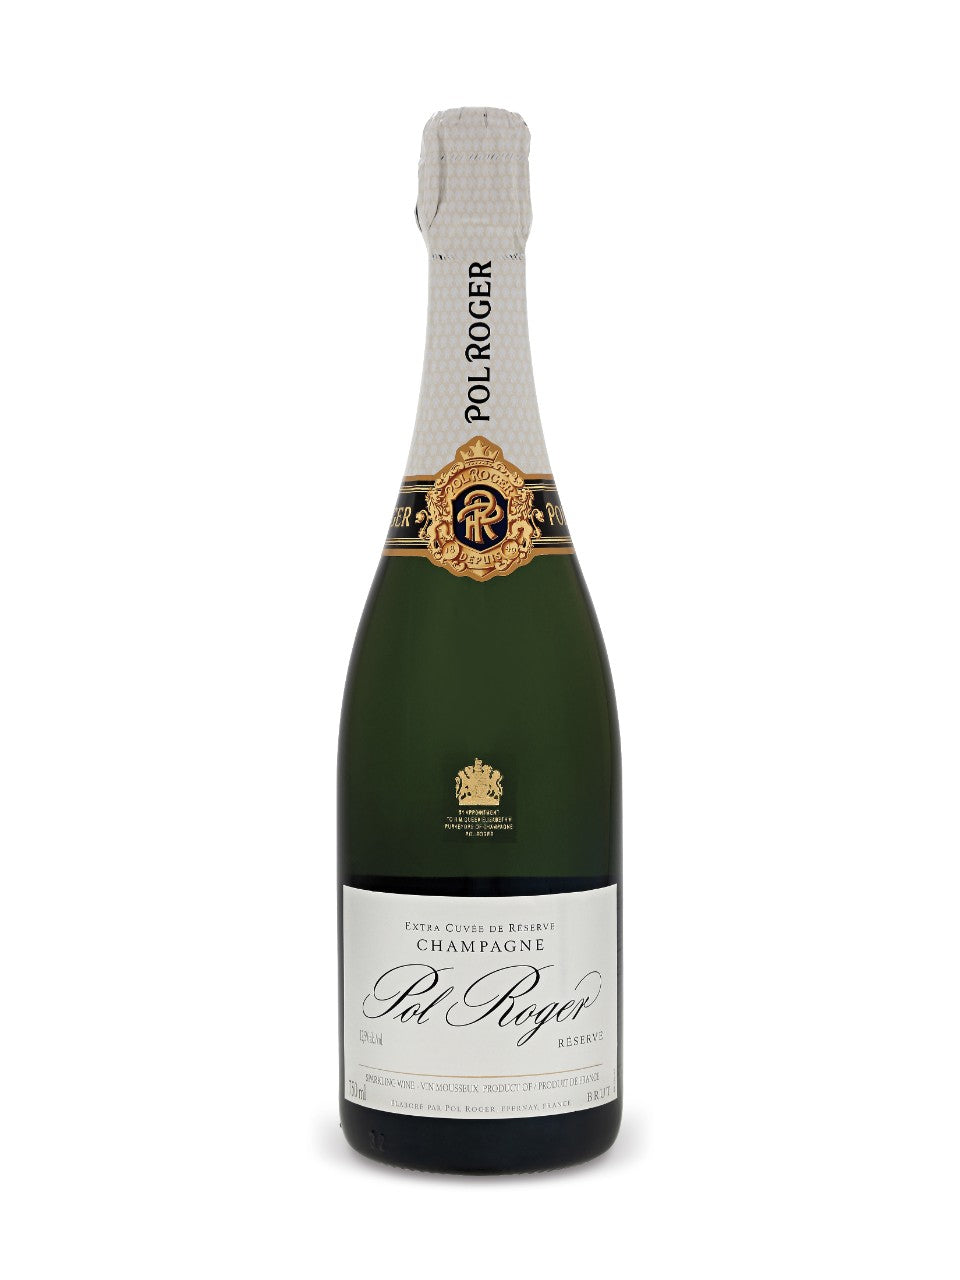 Pol Roger Brut Champagne 750 ml bottle